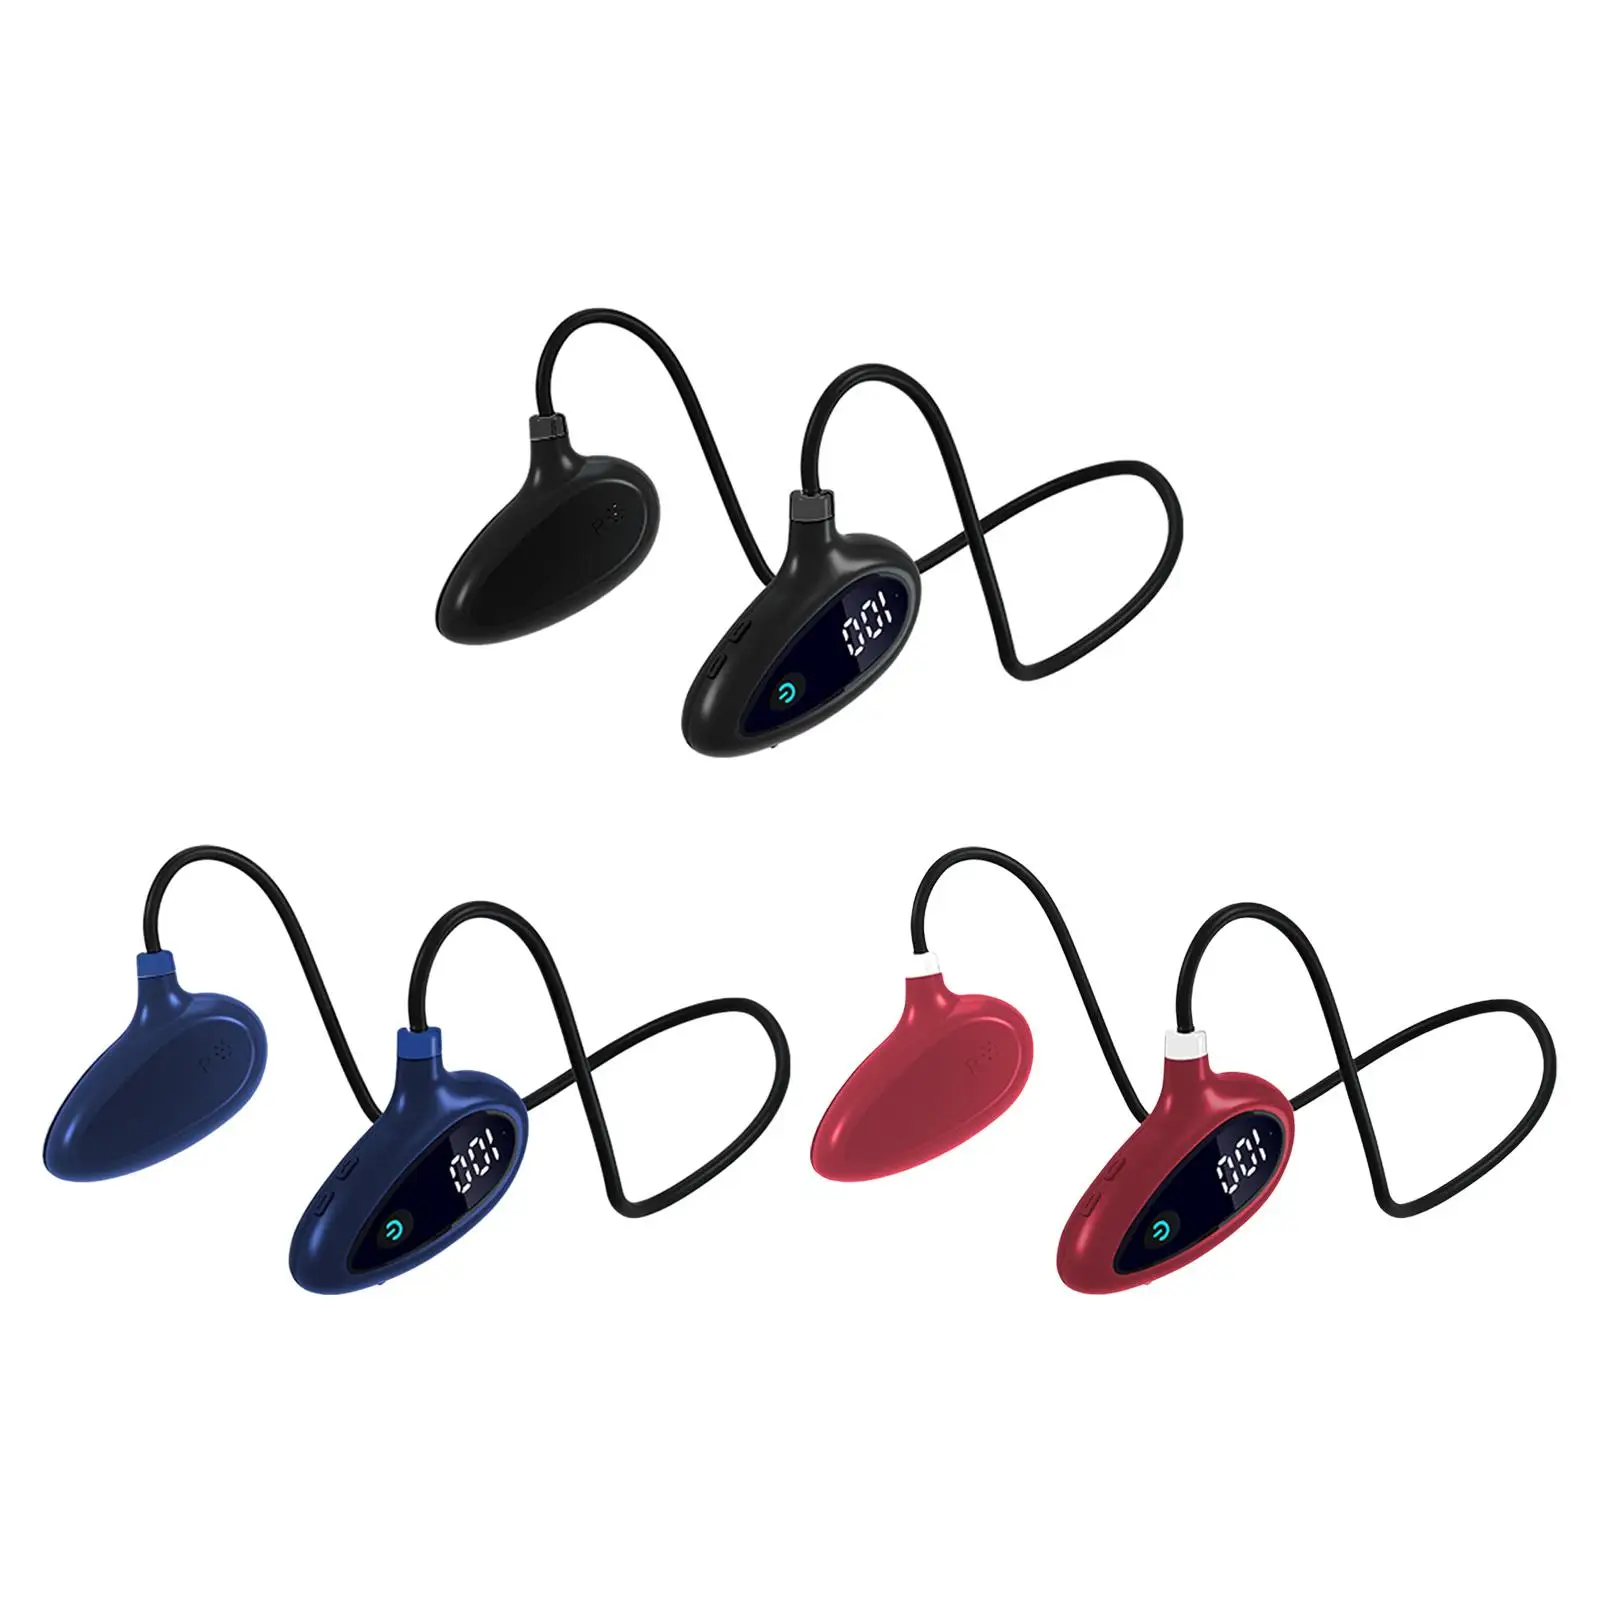 V5.3 Sports Air Conduction Headphones Lightweight 180mAh Battery Capacity Sweatproof Earphones for Driving Yoga Hiking Jogging